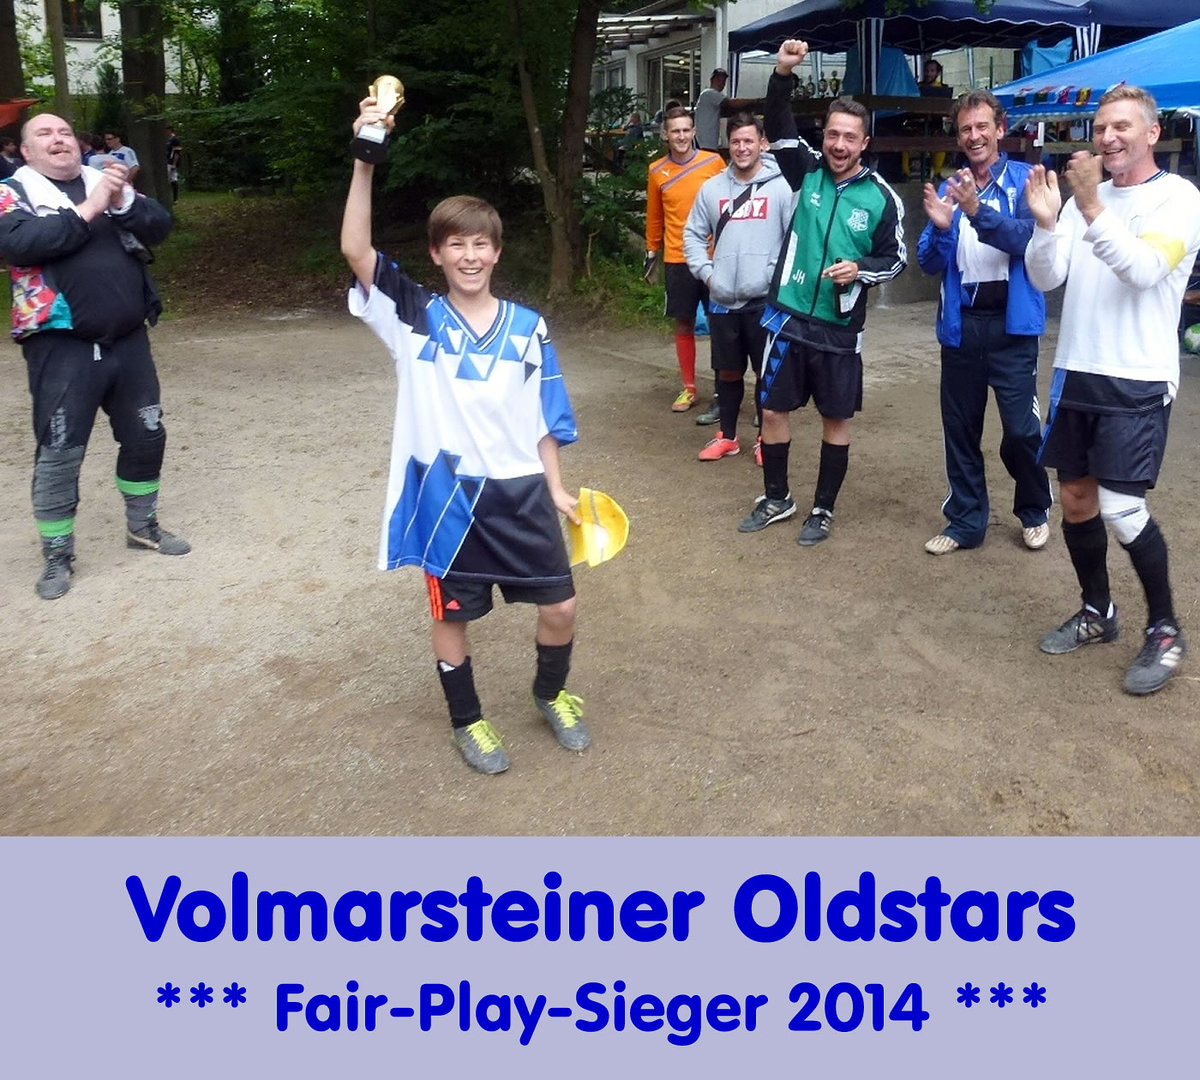 Its cup 2014   fair play sieger   volmarsteiner oldstars retina